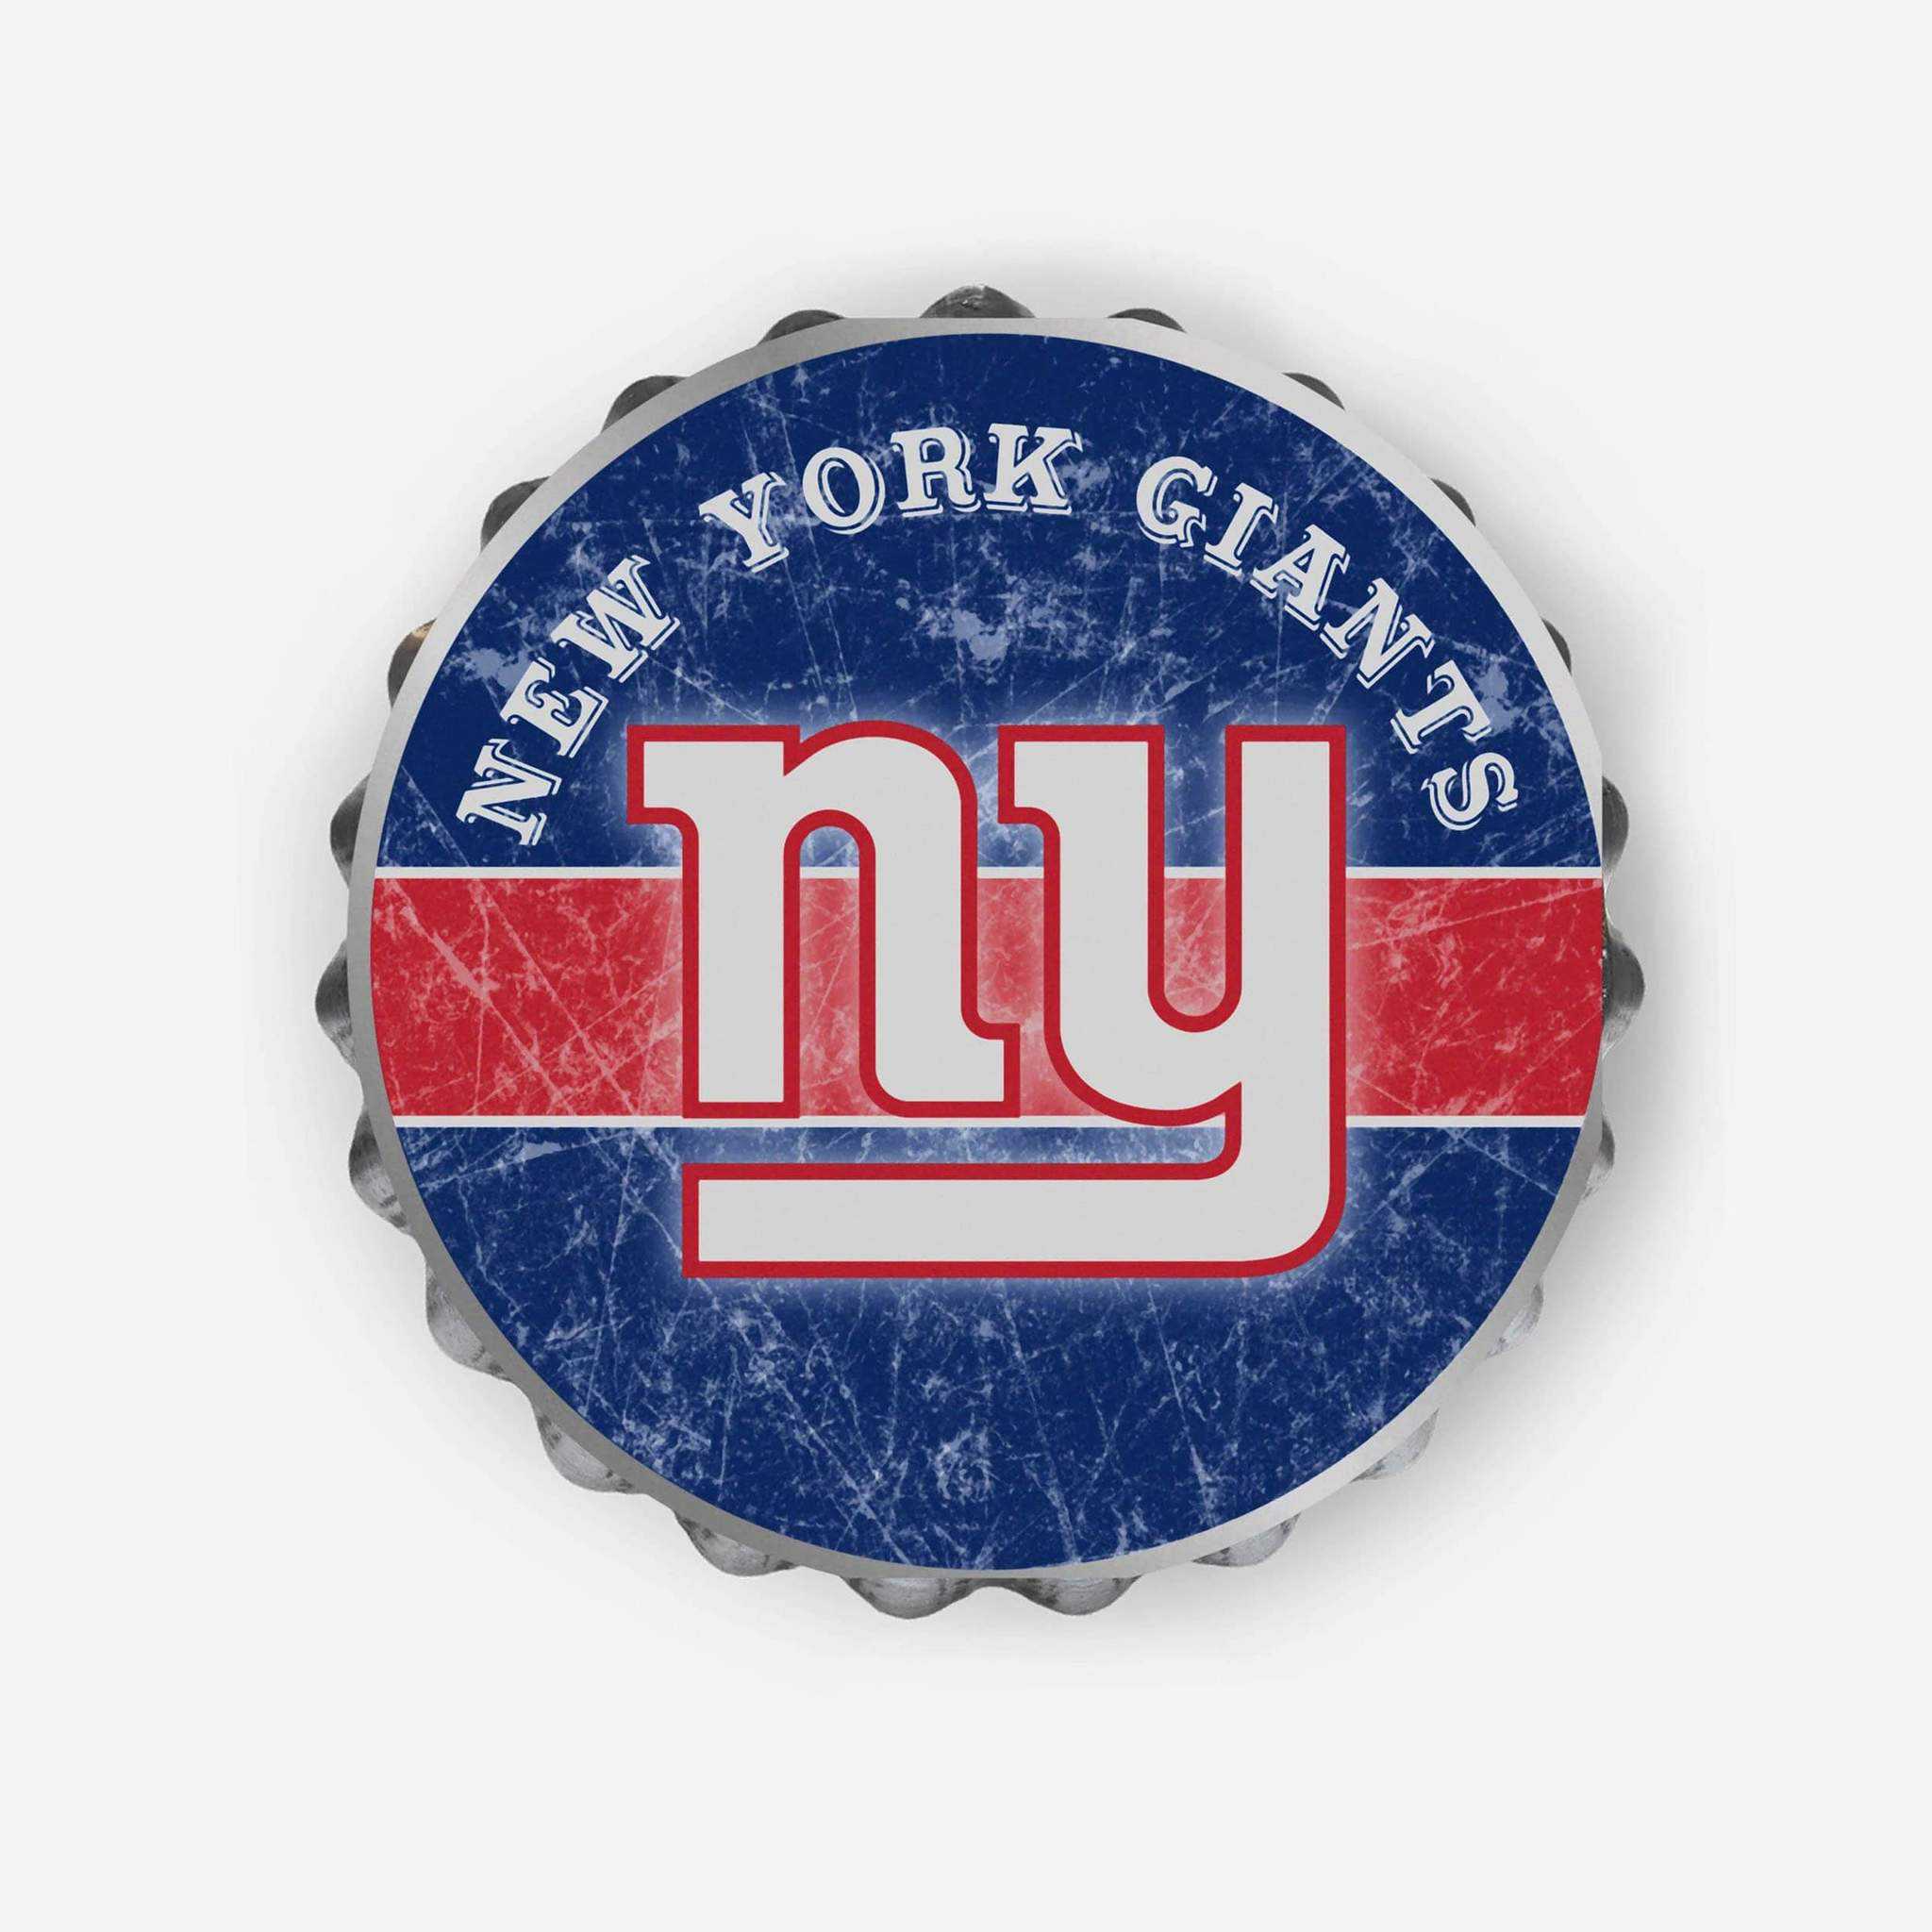 Metal Distressed Bottle Cap Sign-New York Giants